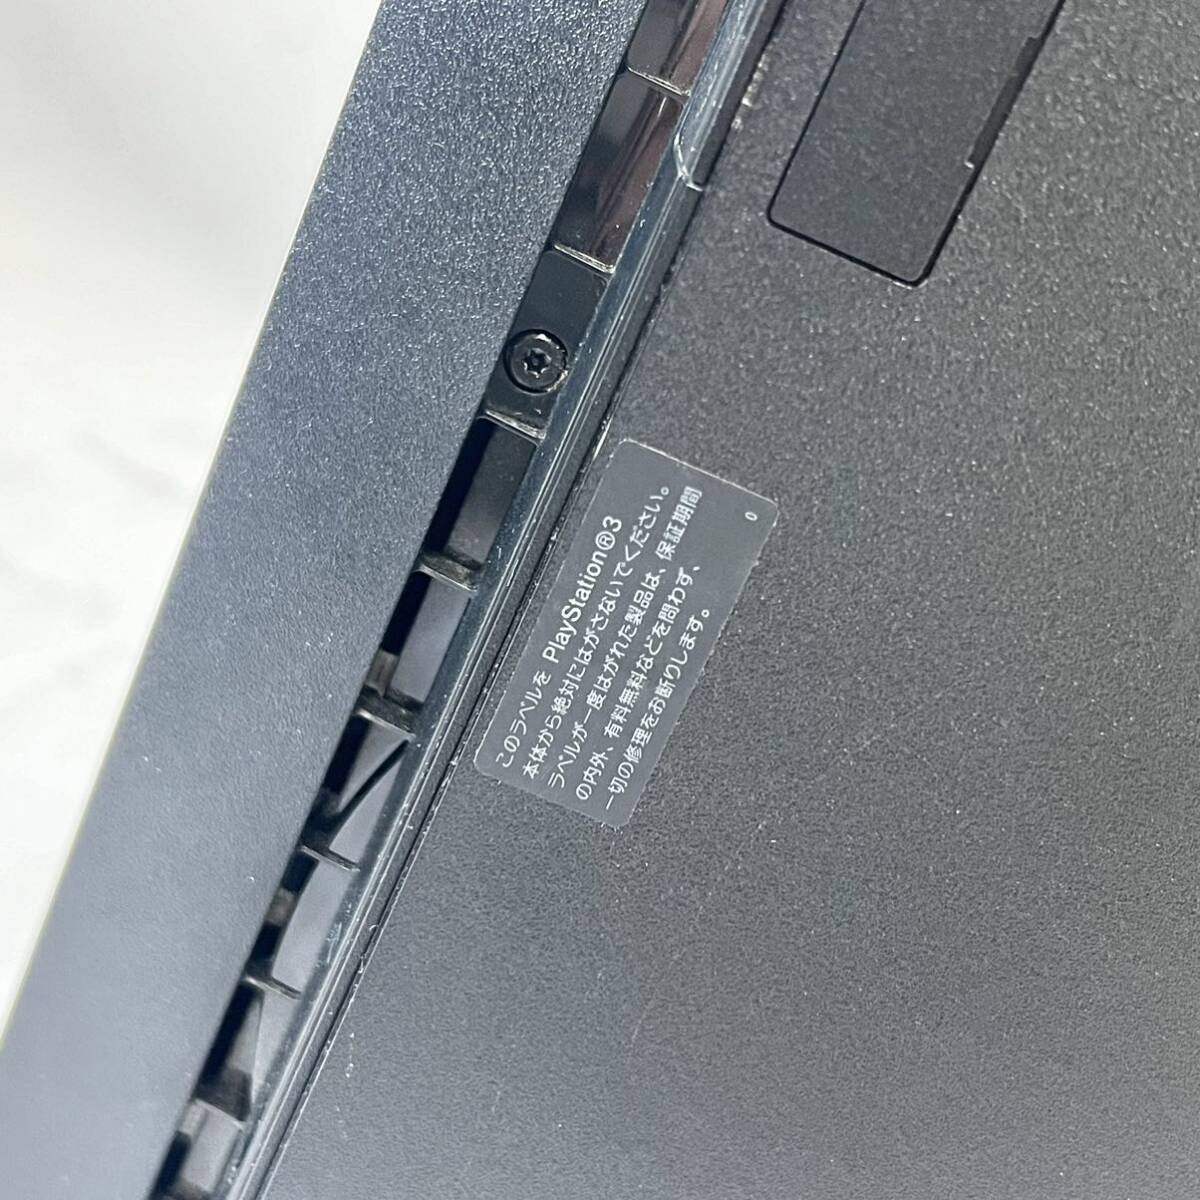 SONY PlayStation3 PS3 PlayStation 3 CECH-3000B контроллер есть электризация проверка settled текущее состояние товар 